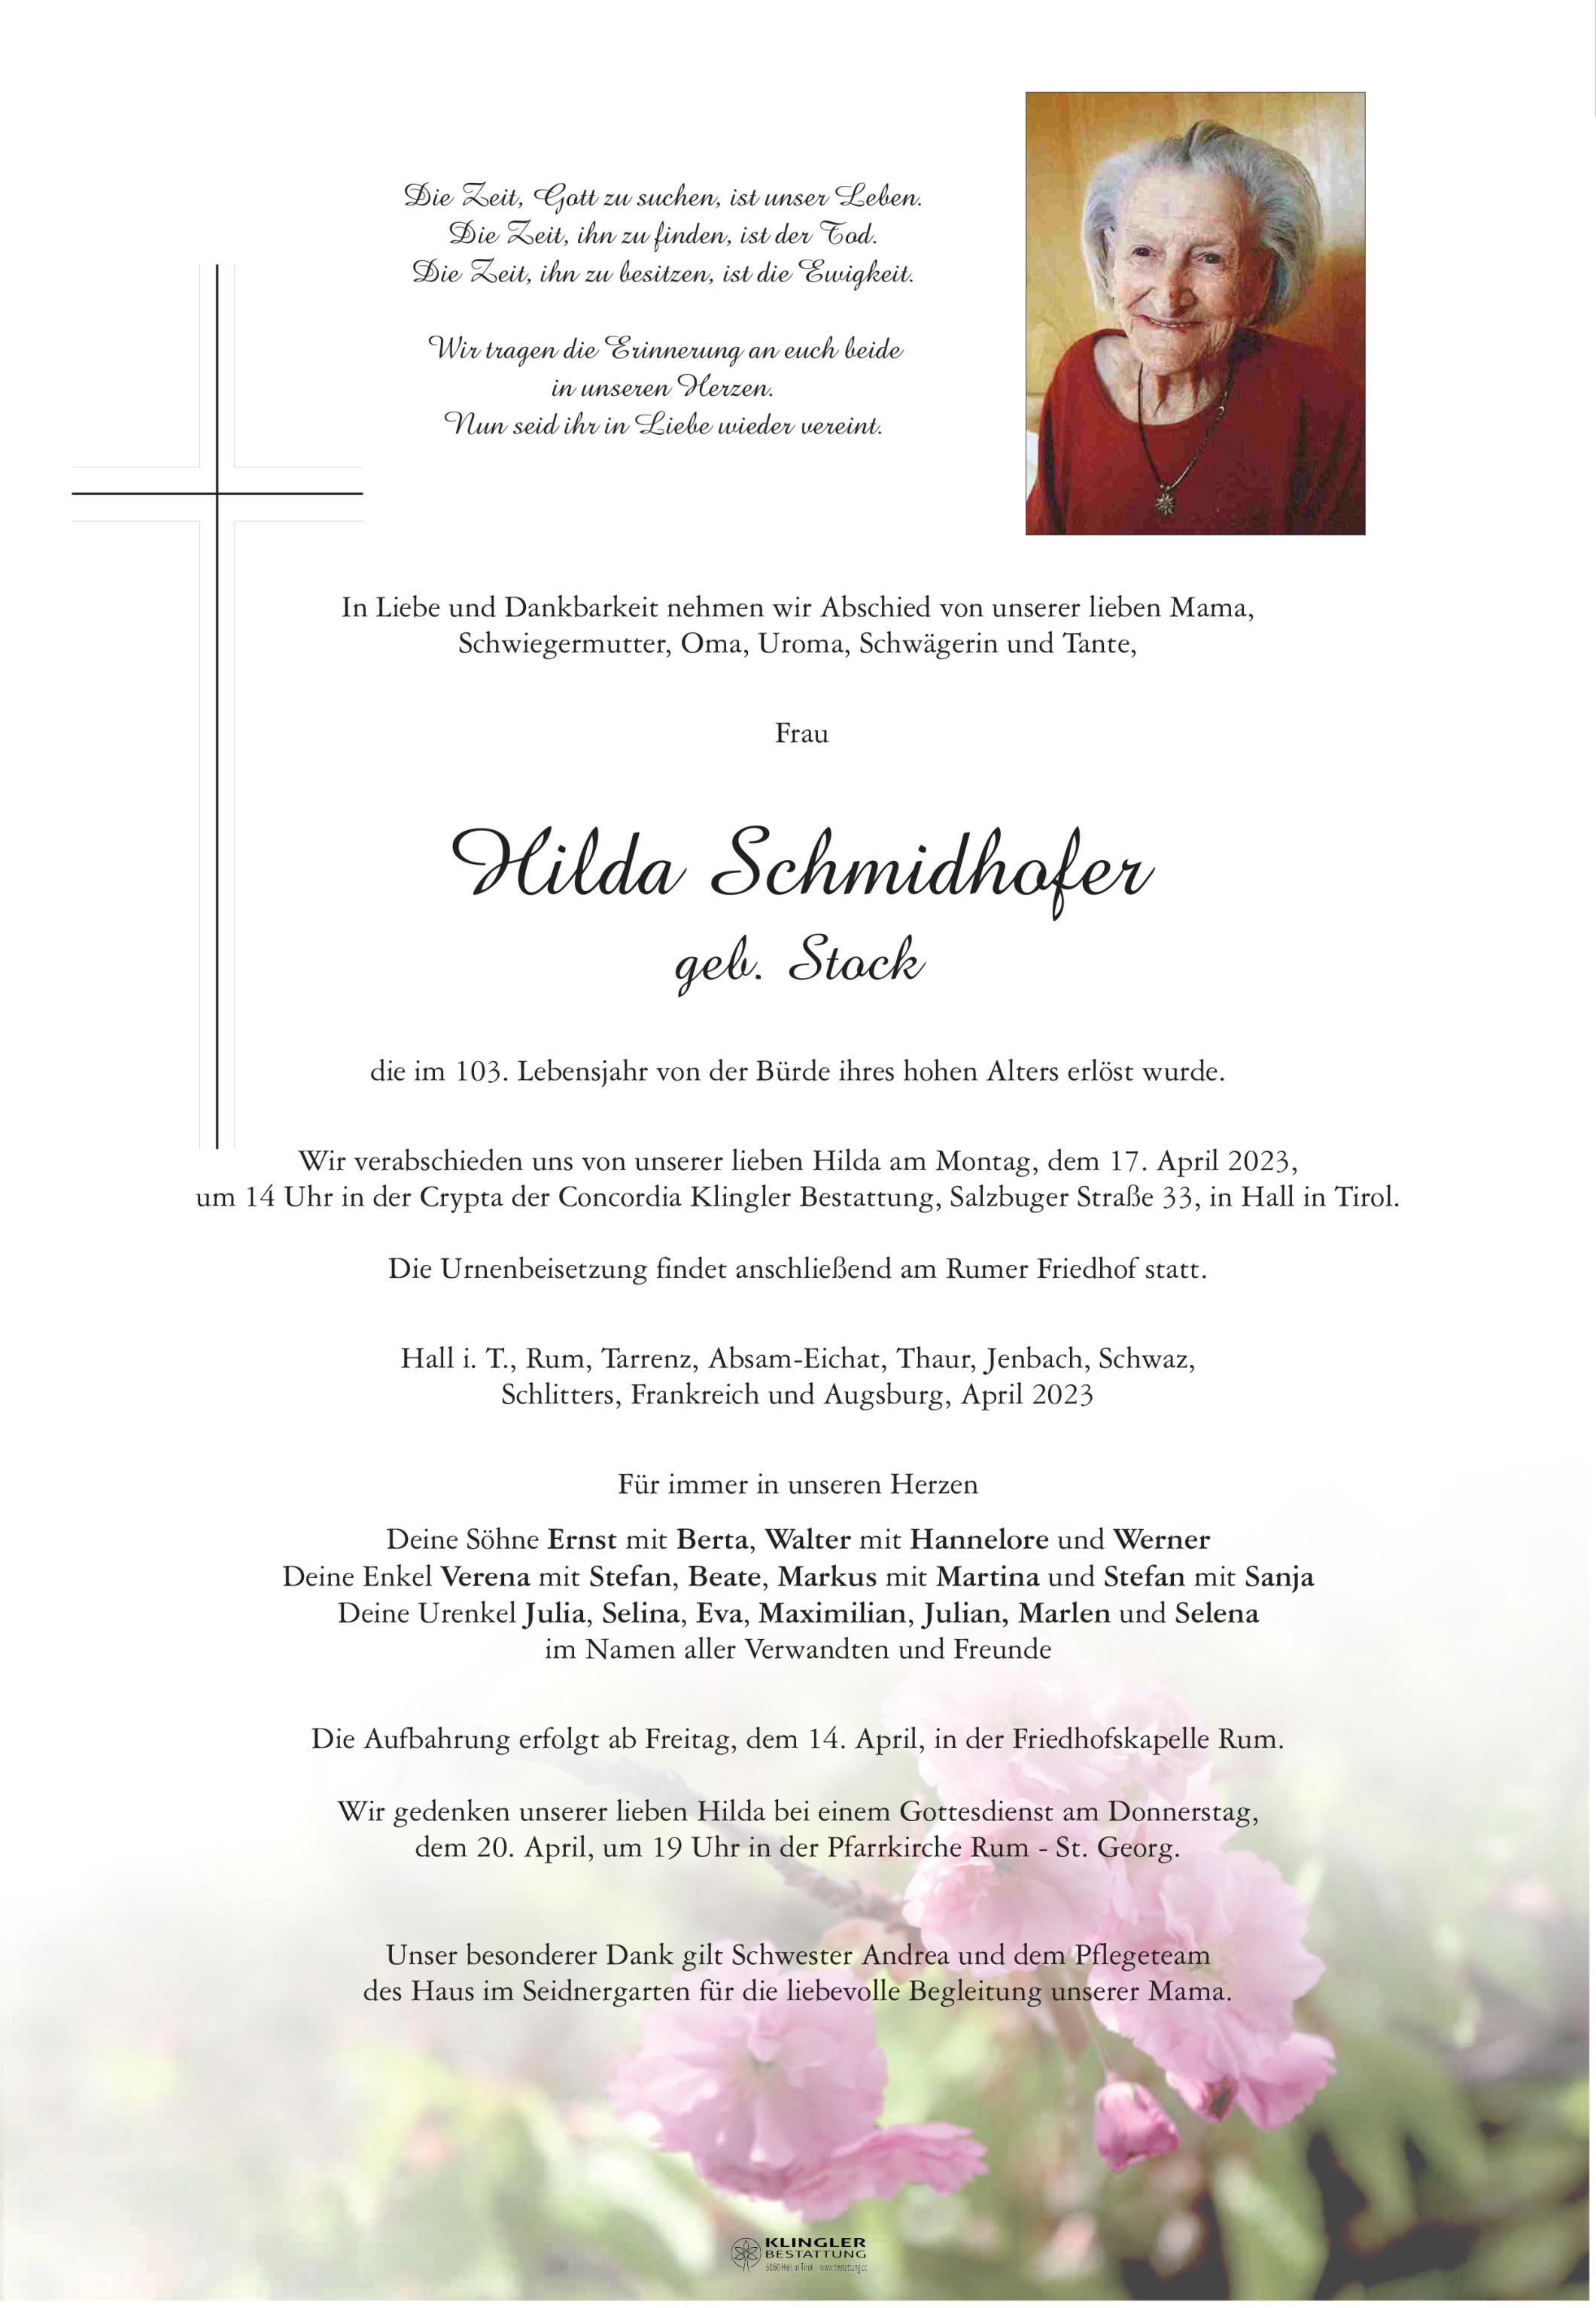 Hilda Schmidhofer